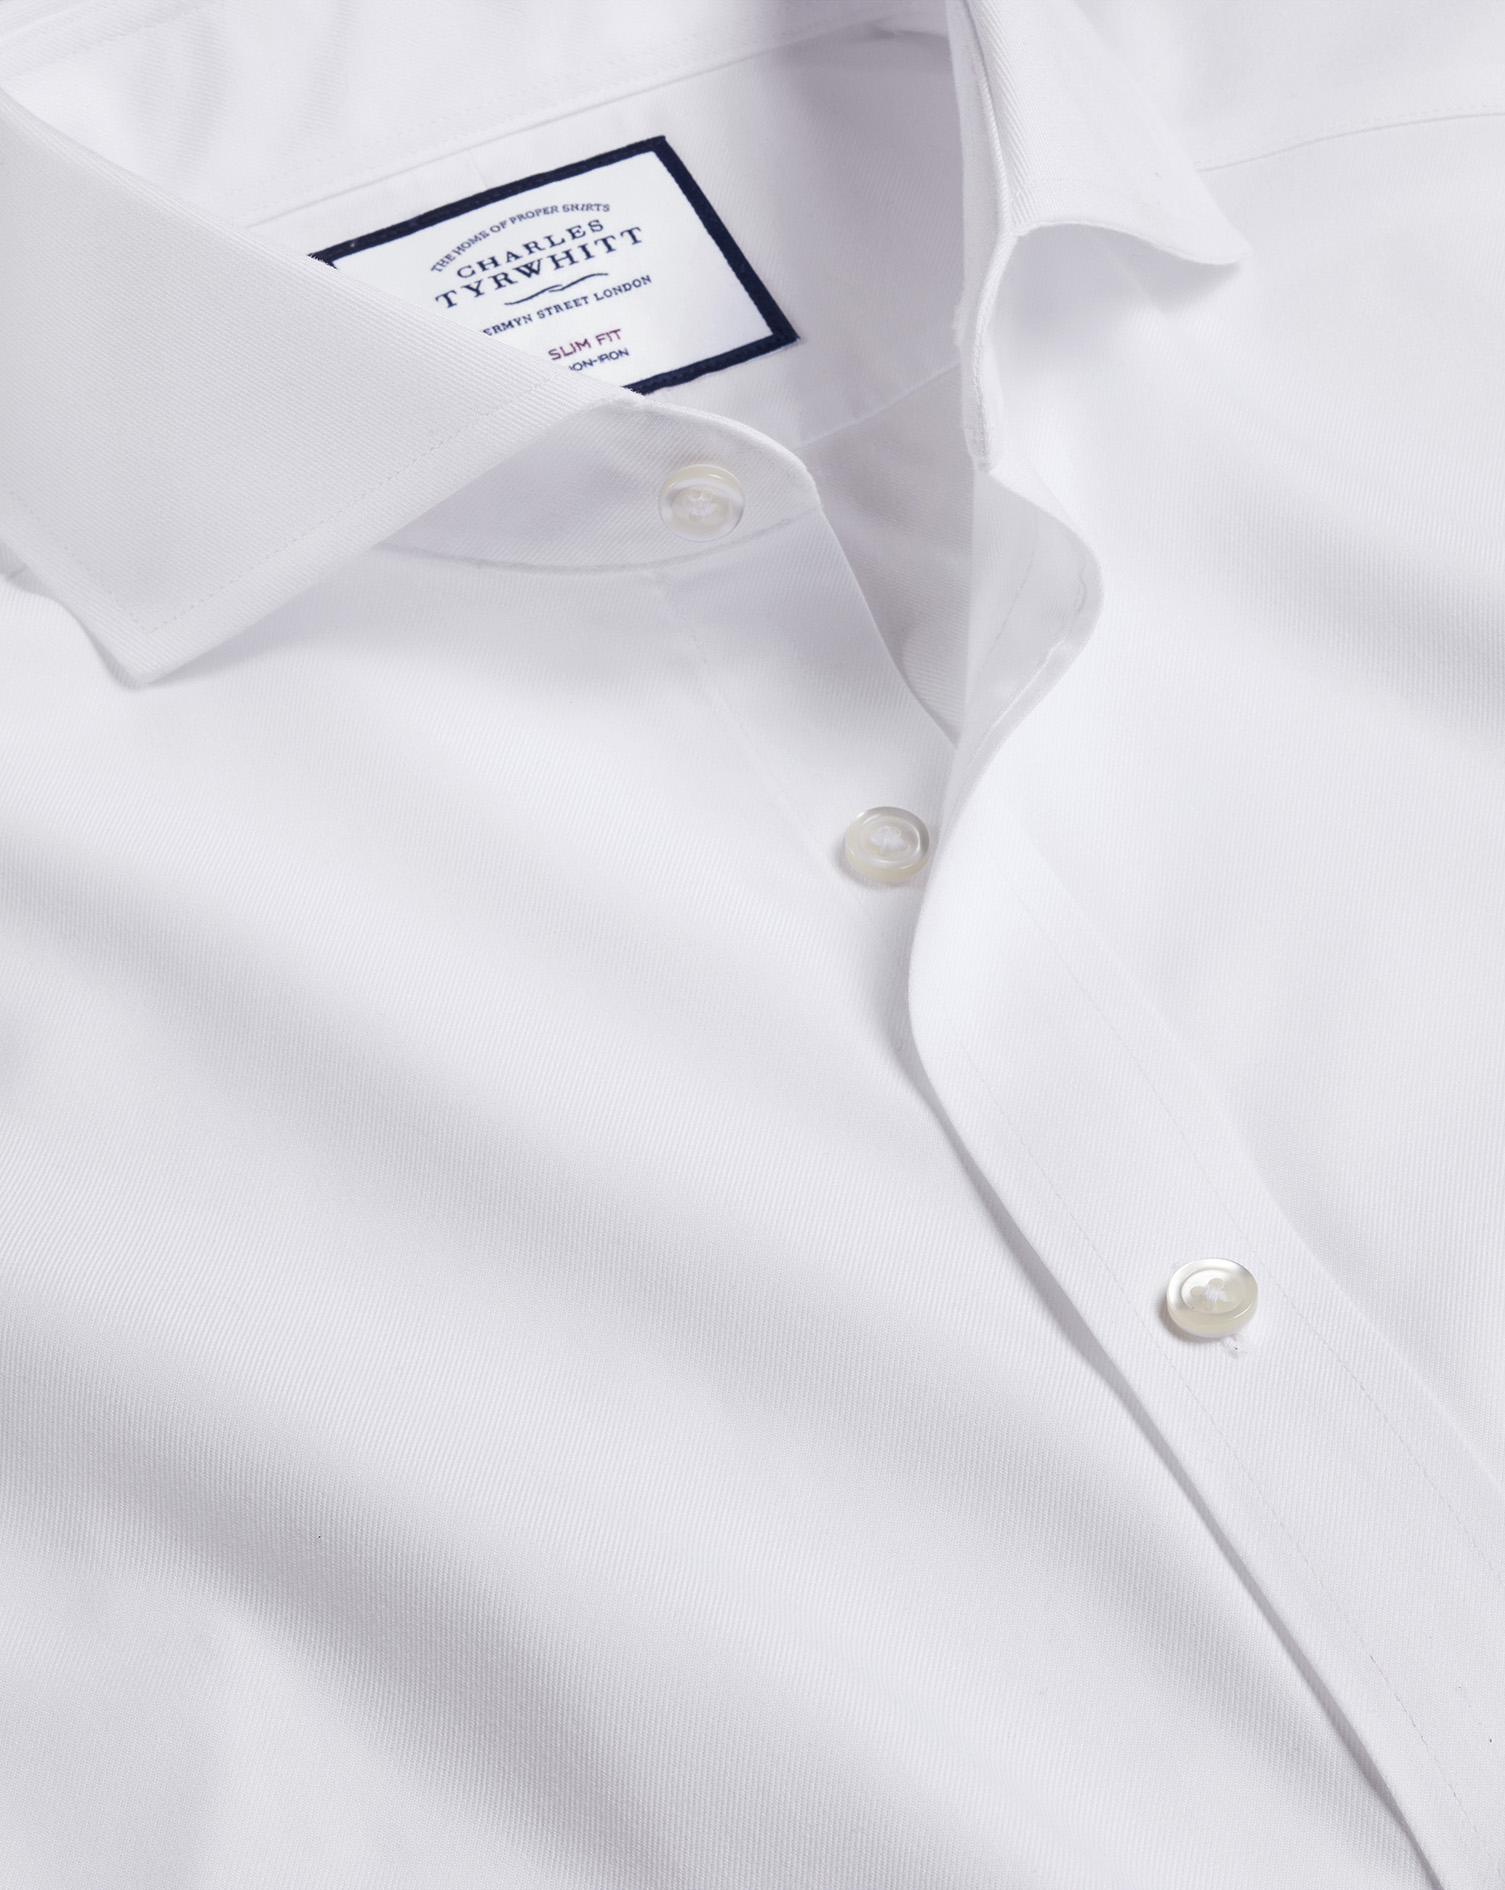 Men's Charles Tyrwhitt Extreme Cutaway Collar Non-Iron Twill Dress Shirt - White French Cuff Size Me